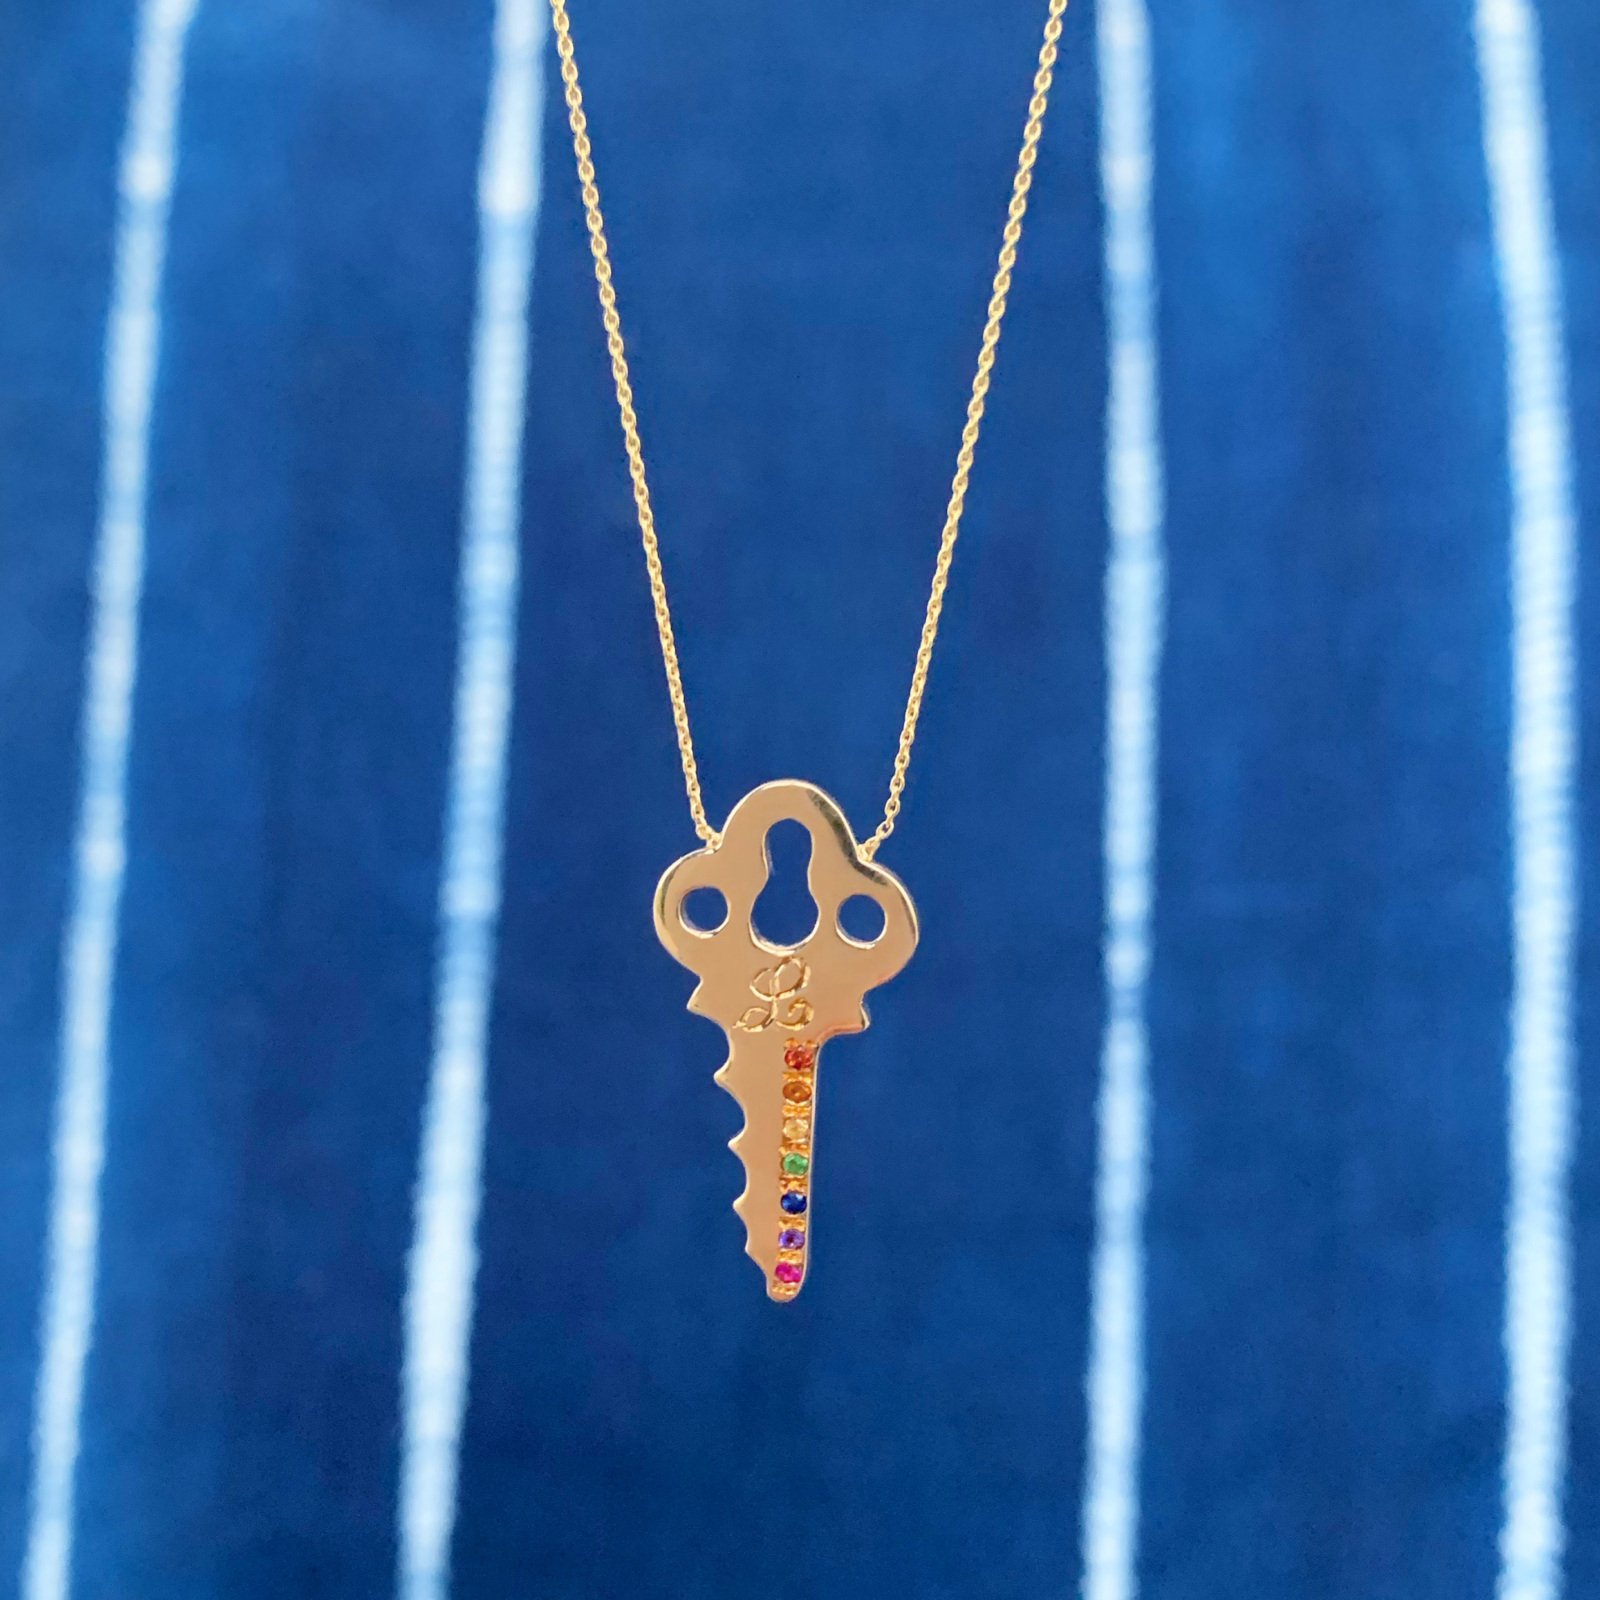 Custom Key Necklace